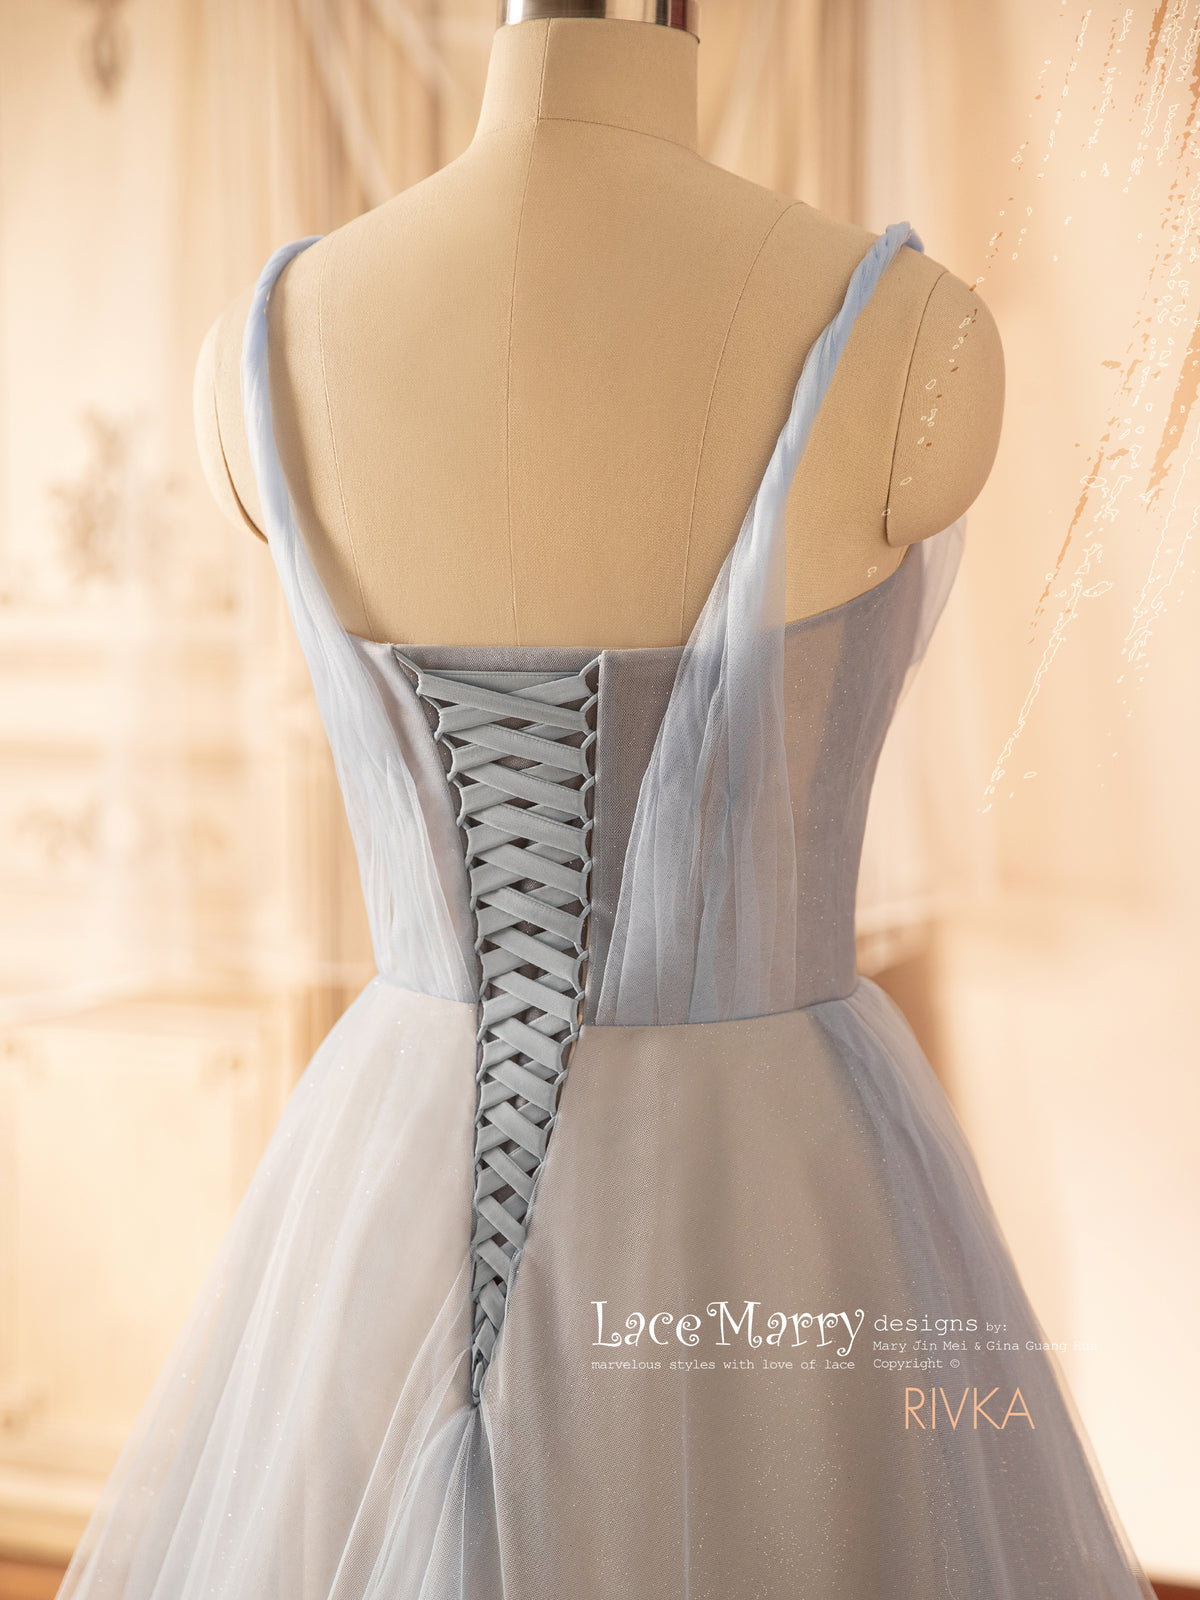 RIVKA / Light Blue Wedding Dress with Nude Underlay